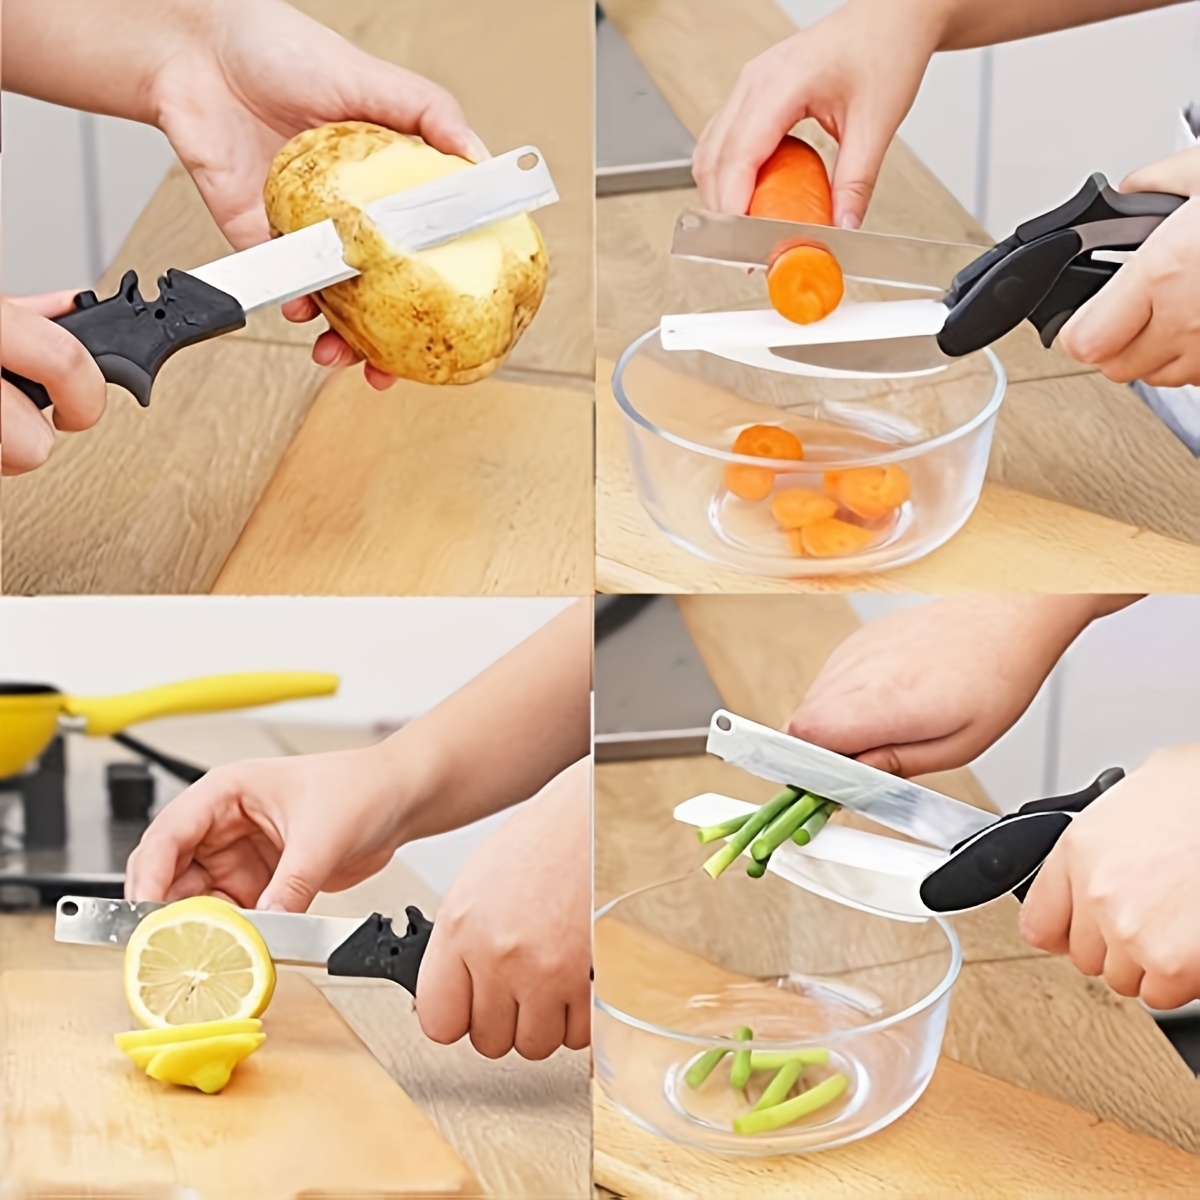 2-in-1 Clever Cutter Knife & Cutting Board Scissors Smart Tool As